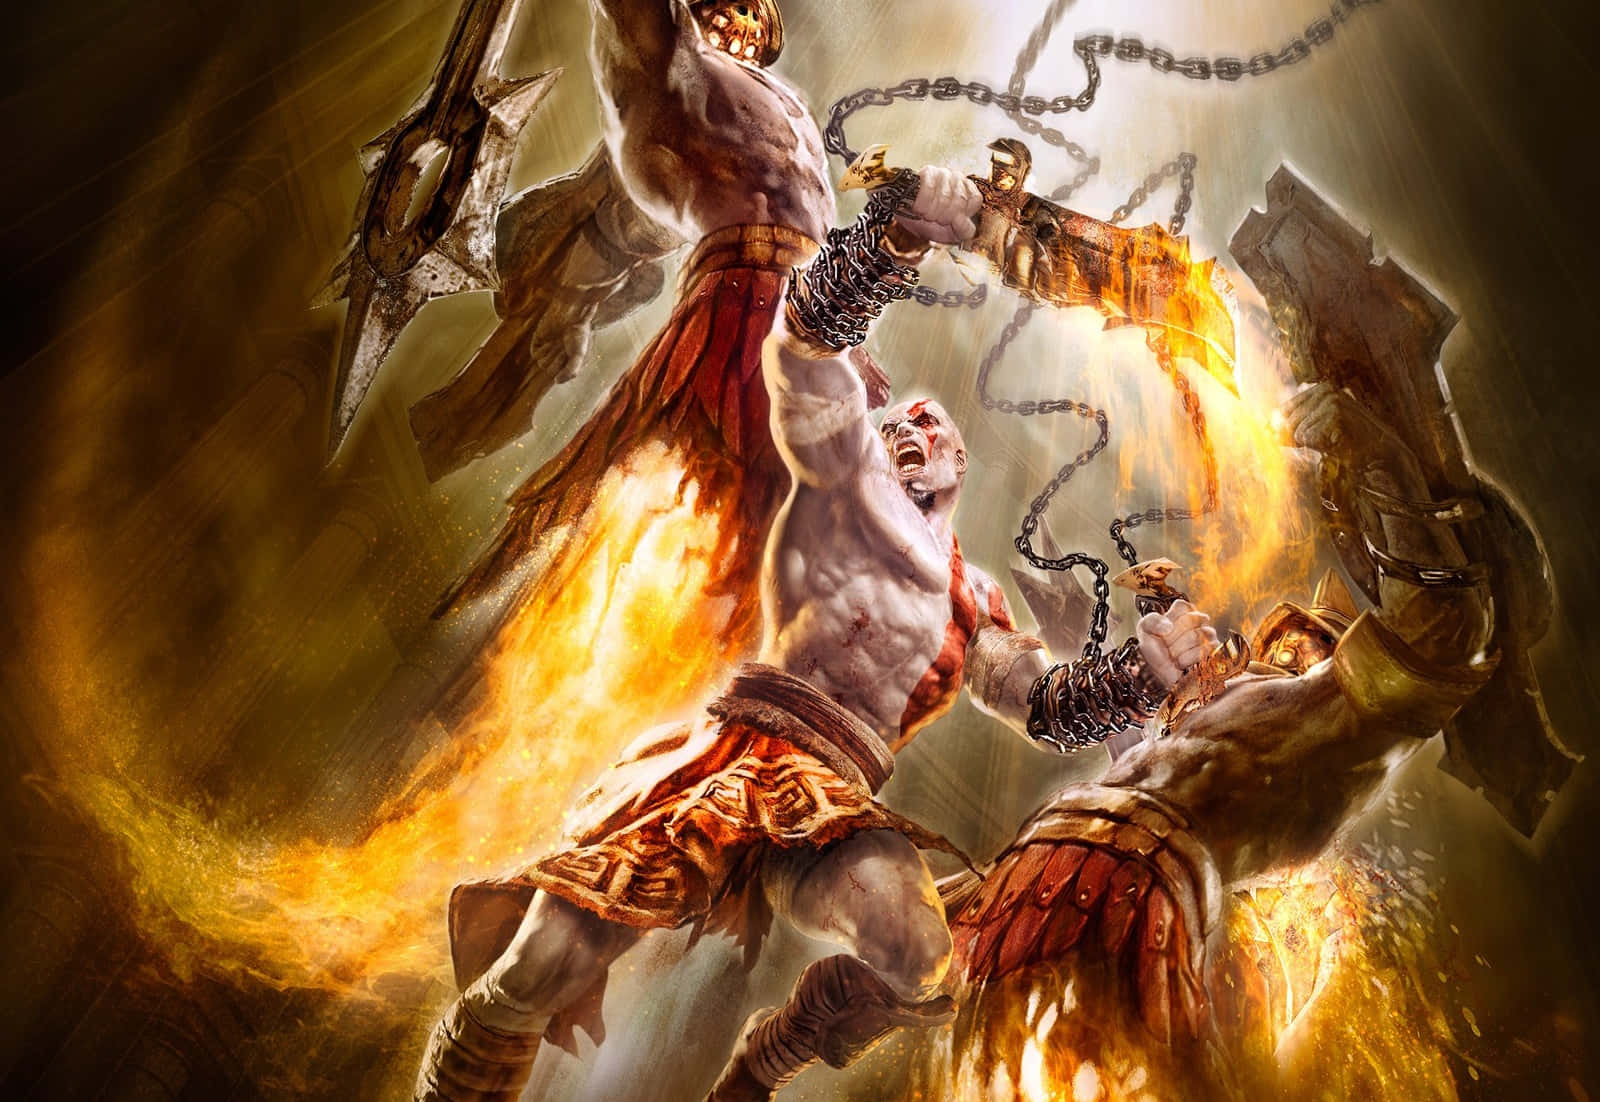 HD wallpaper: God of War, Kratos, Atreus, Thor (Marvel Comics)